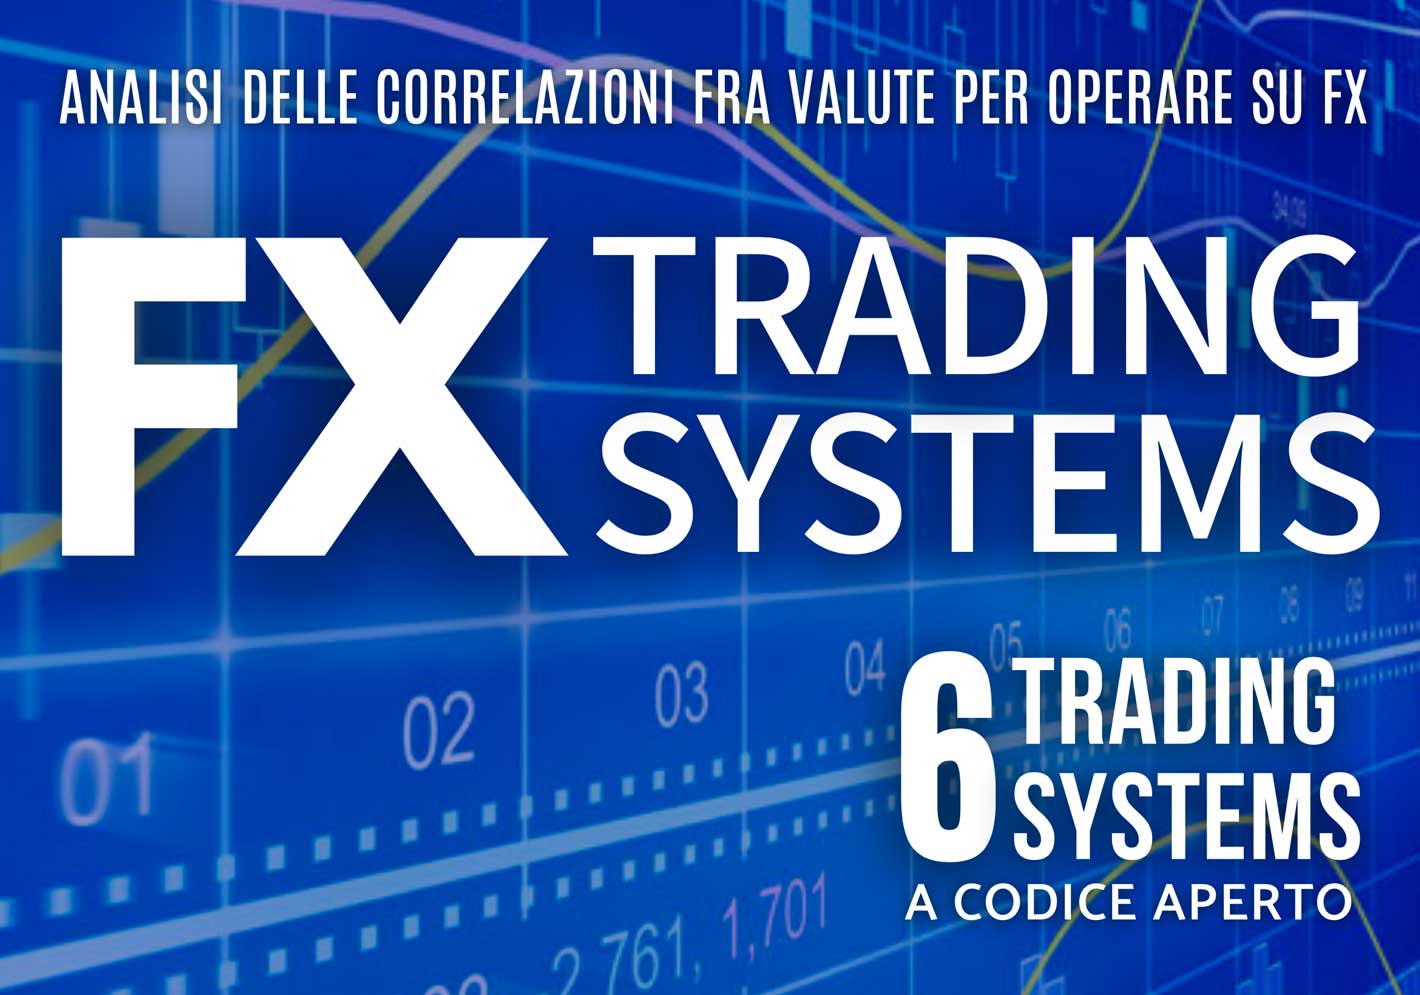 Qtlab corsi trading forex, FX Trading Systems corso forex trading QTLab